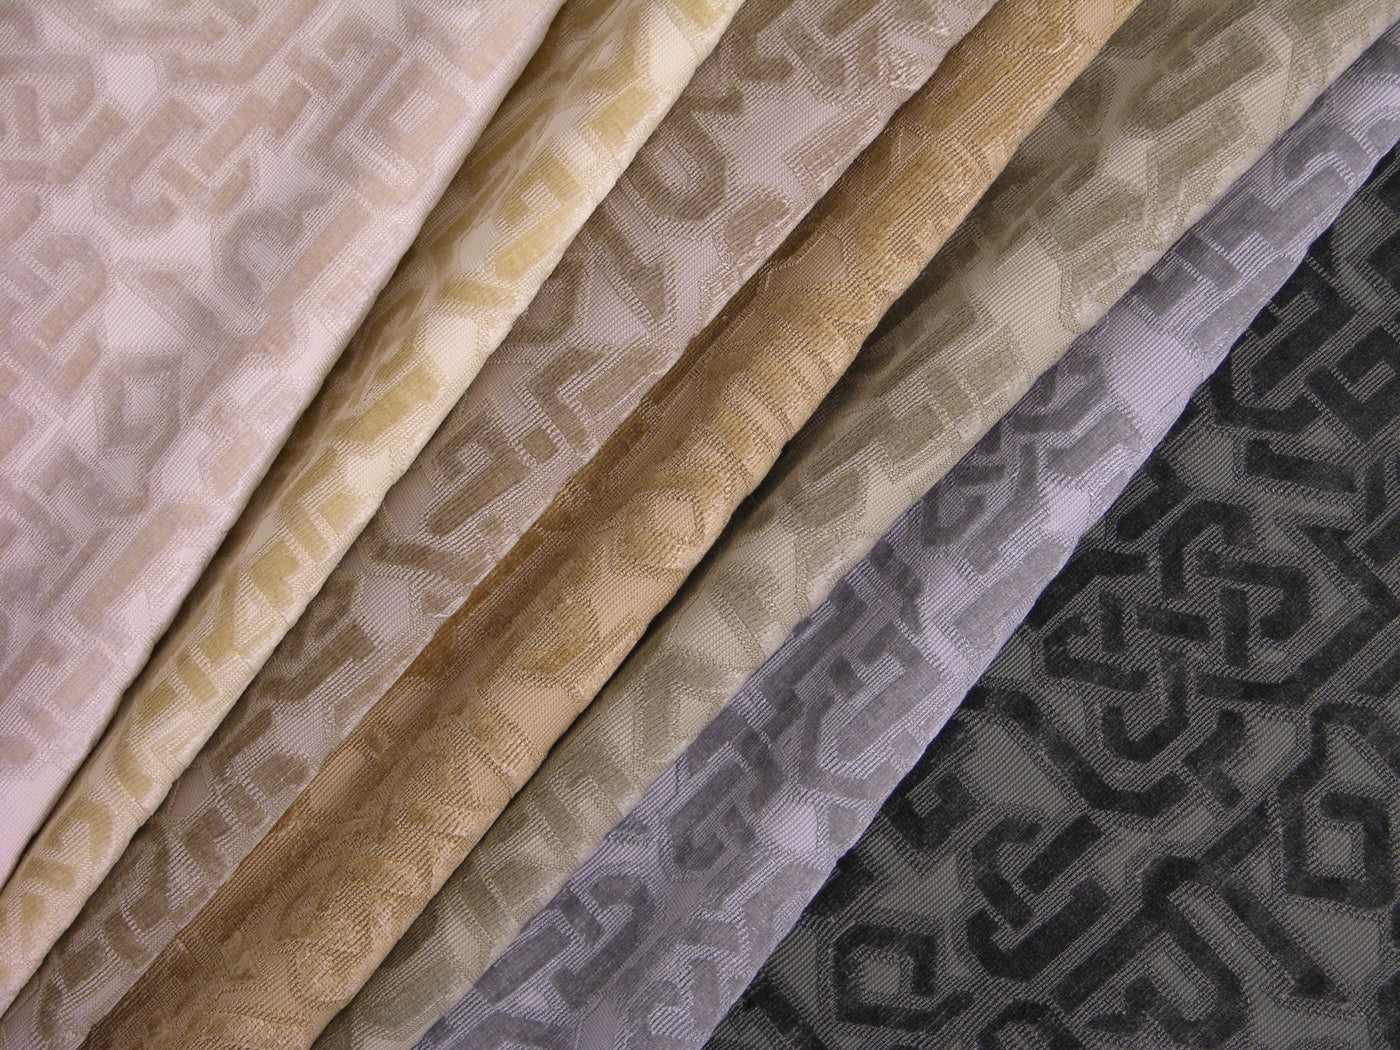 a group of velvet fabrics with a geometric lattice design